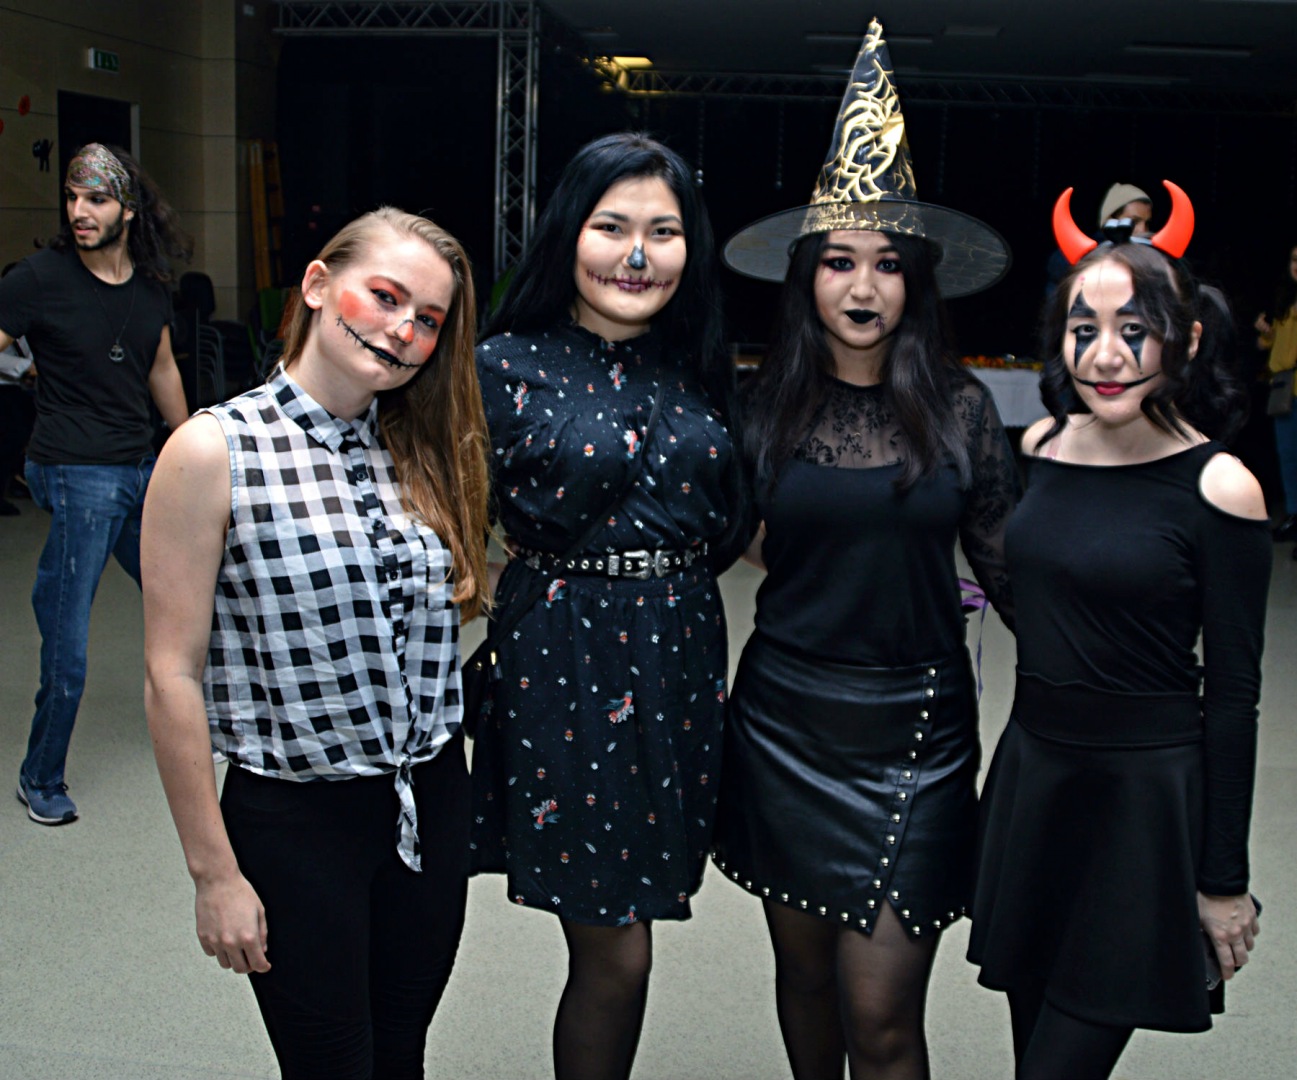 International Students Halloween Party 2018 – University of Opole